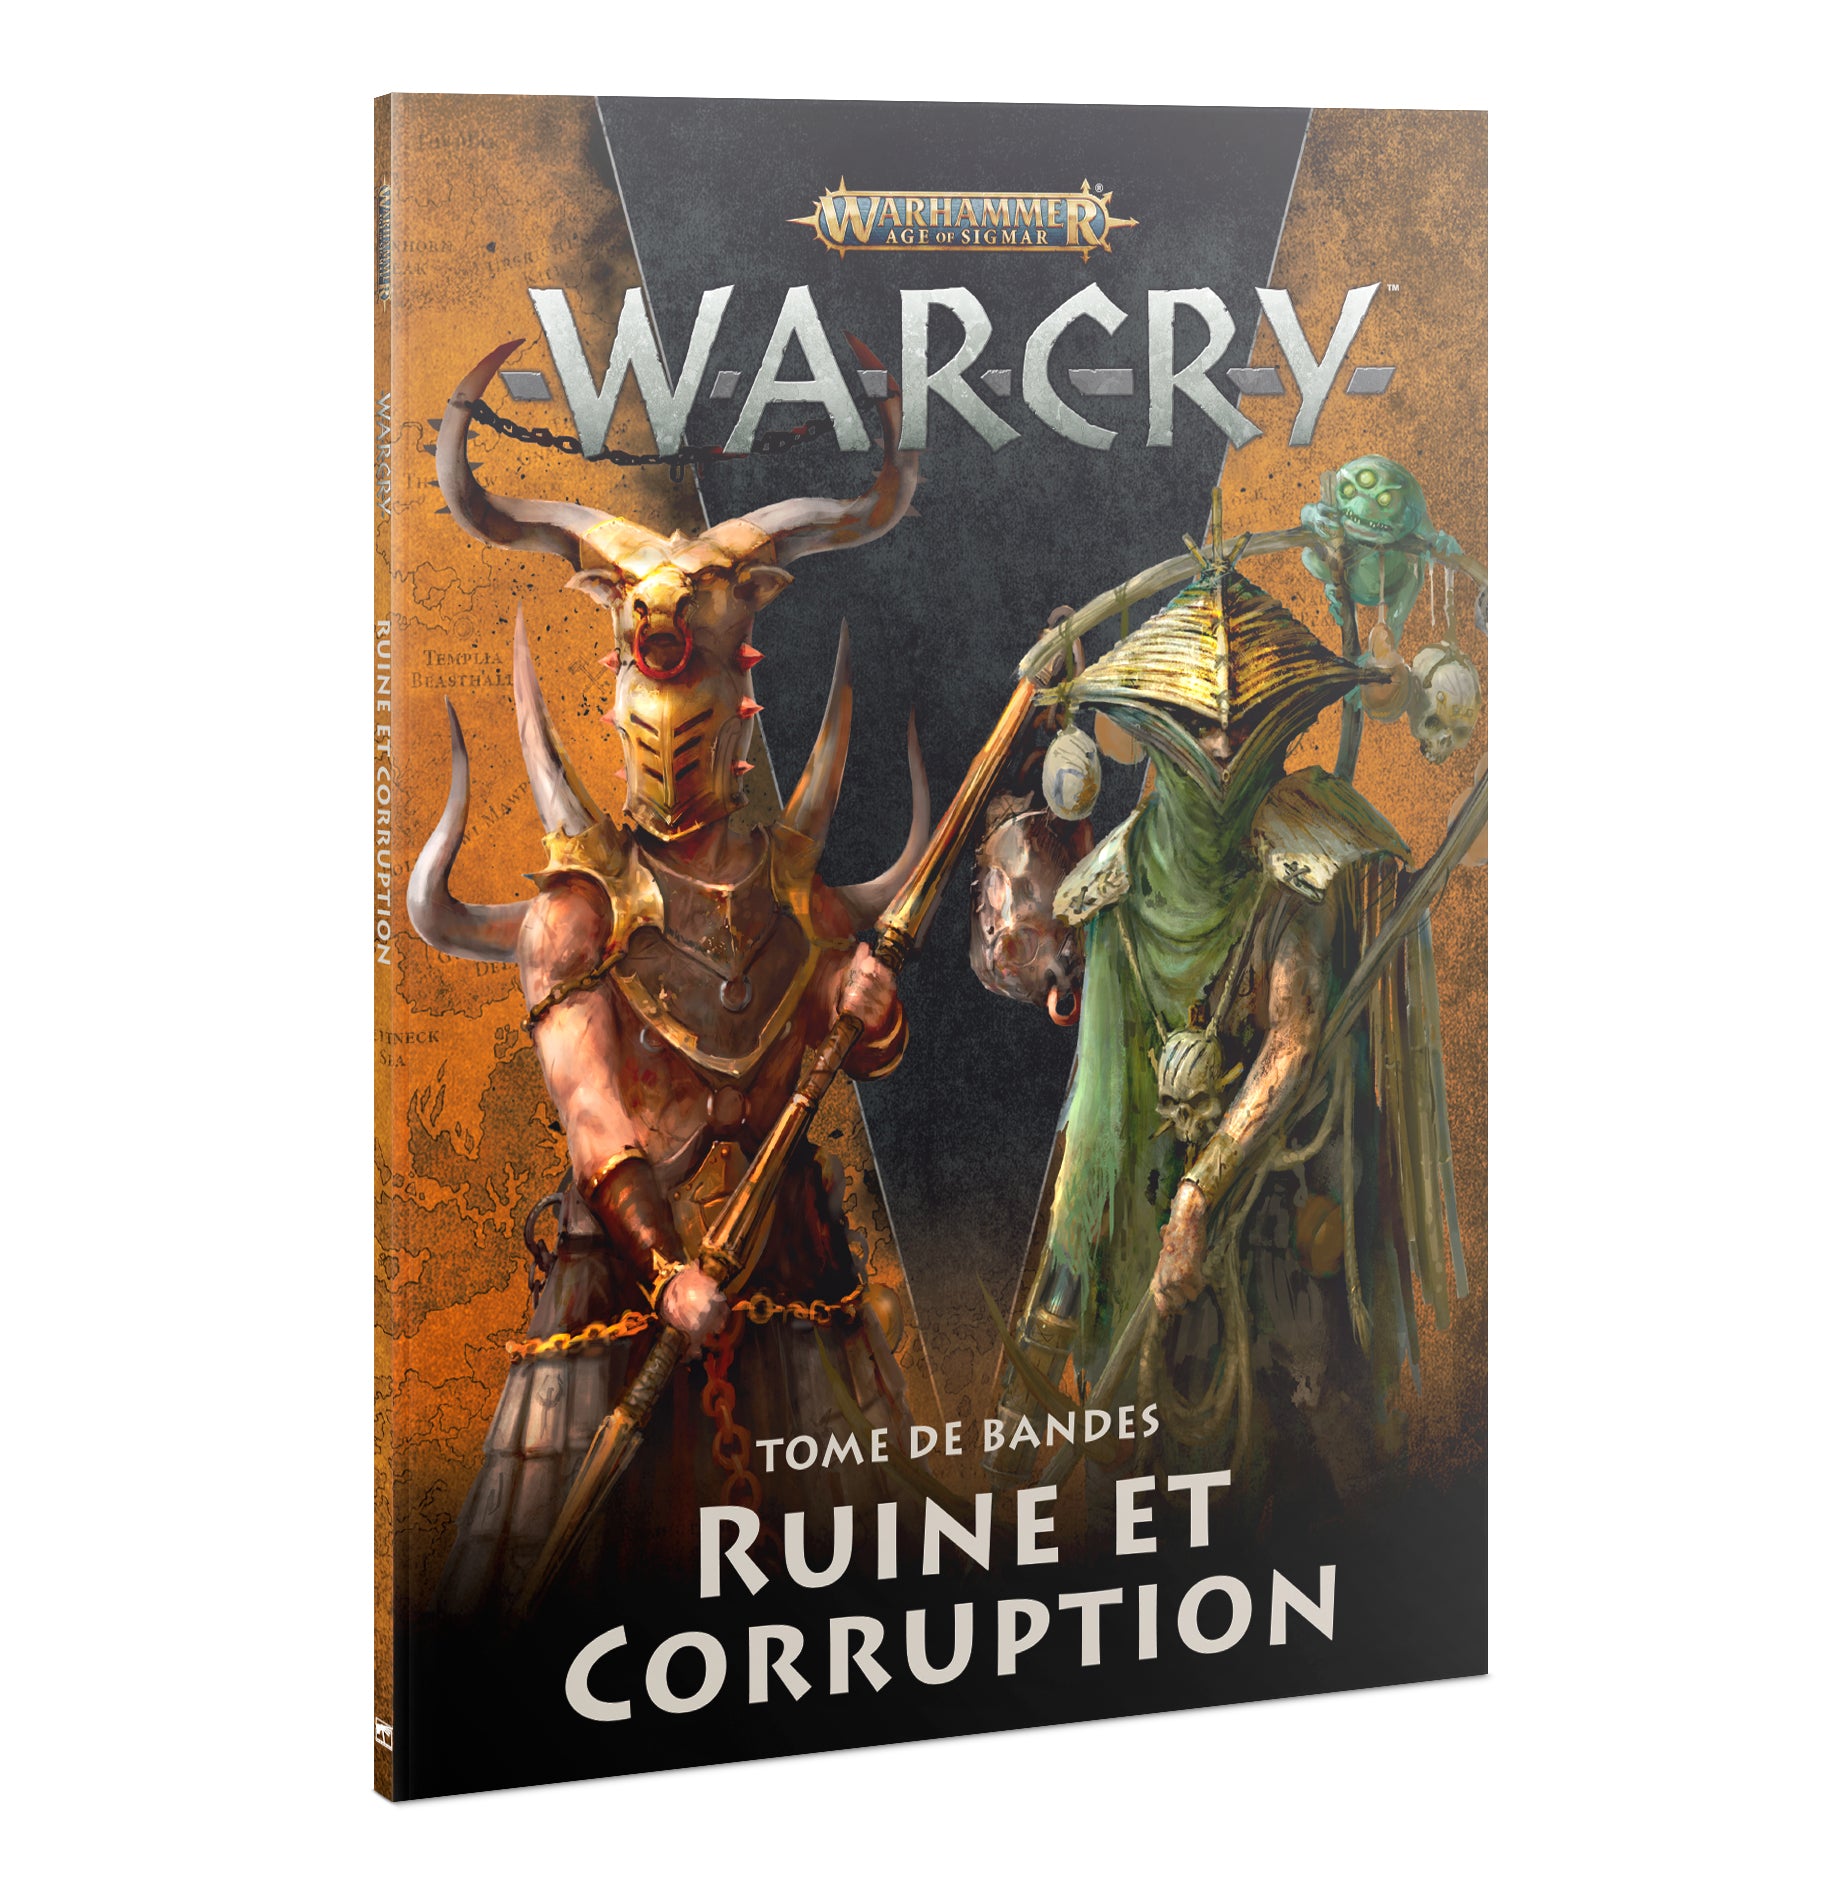 Warband Tome: Rot and Ruin | Kessel Run Games Inc. 